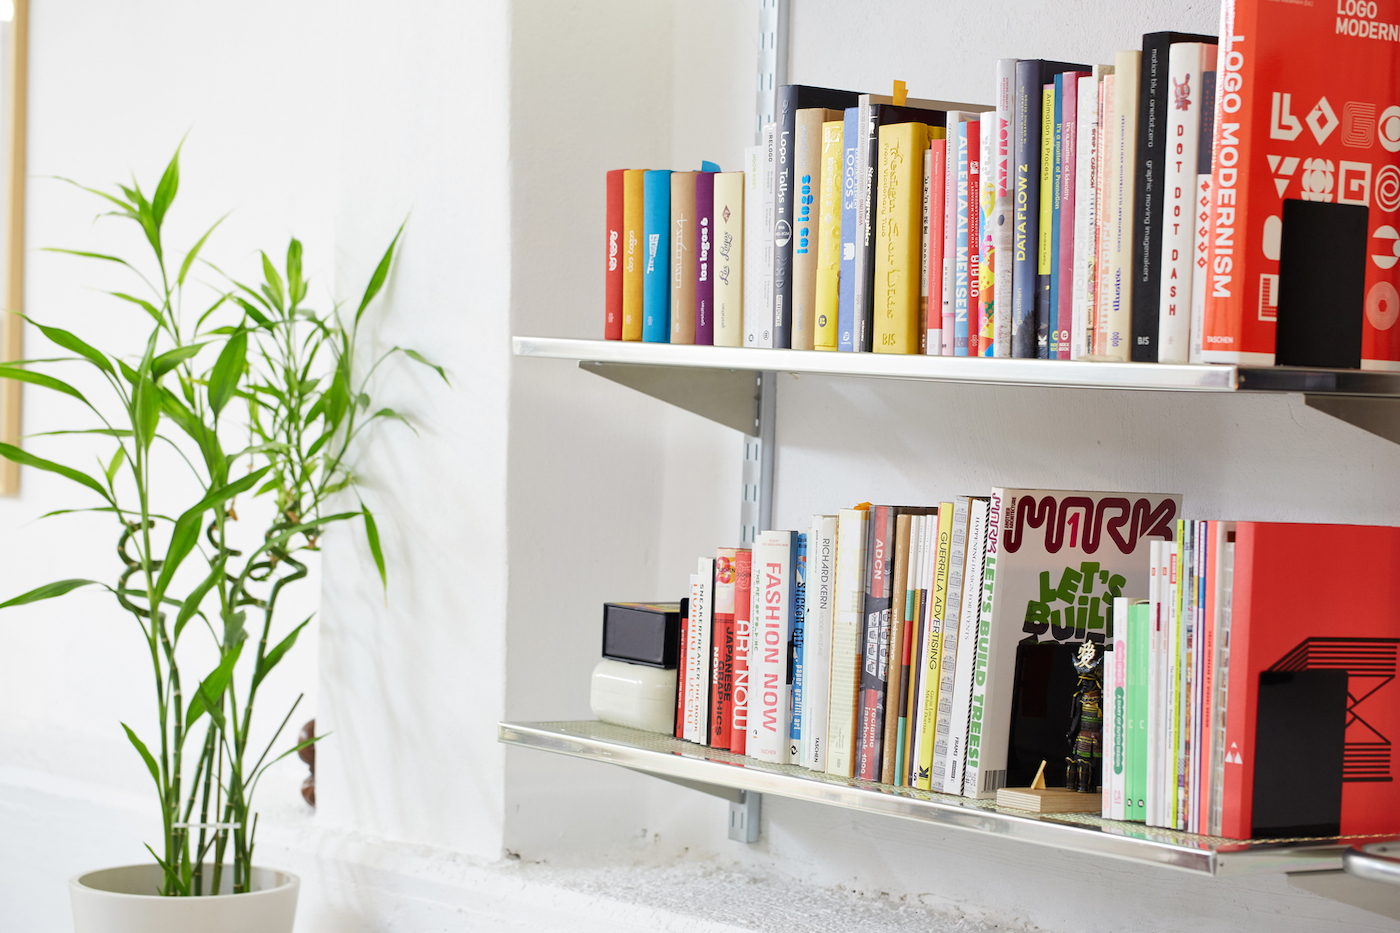 Shelf with books